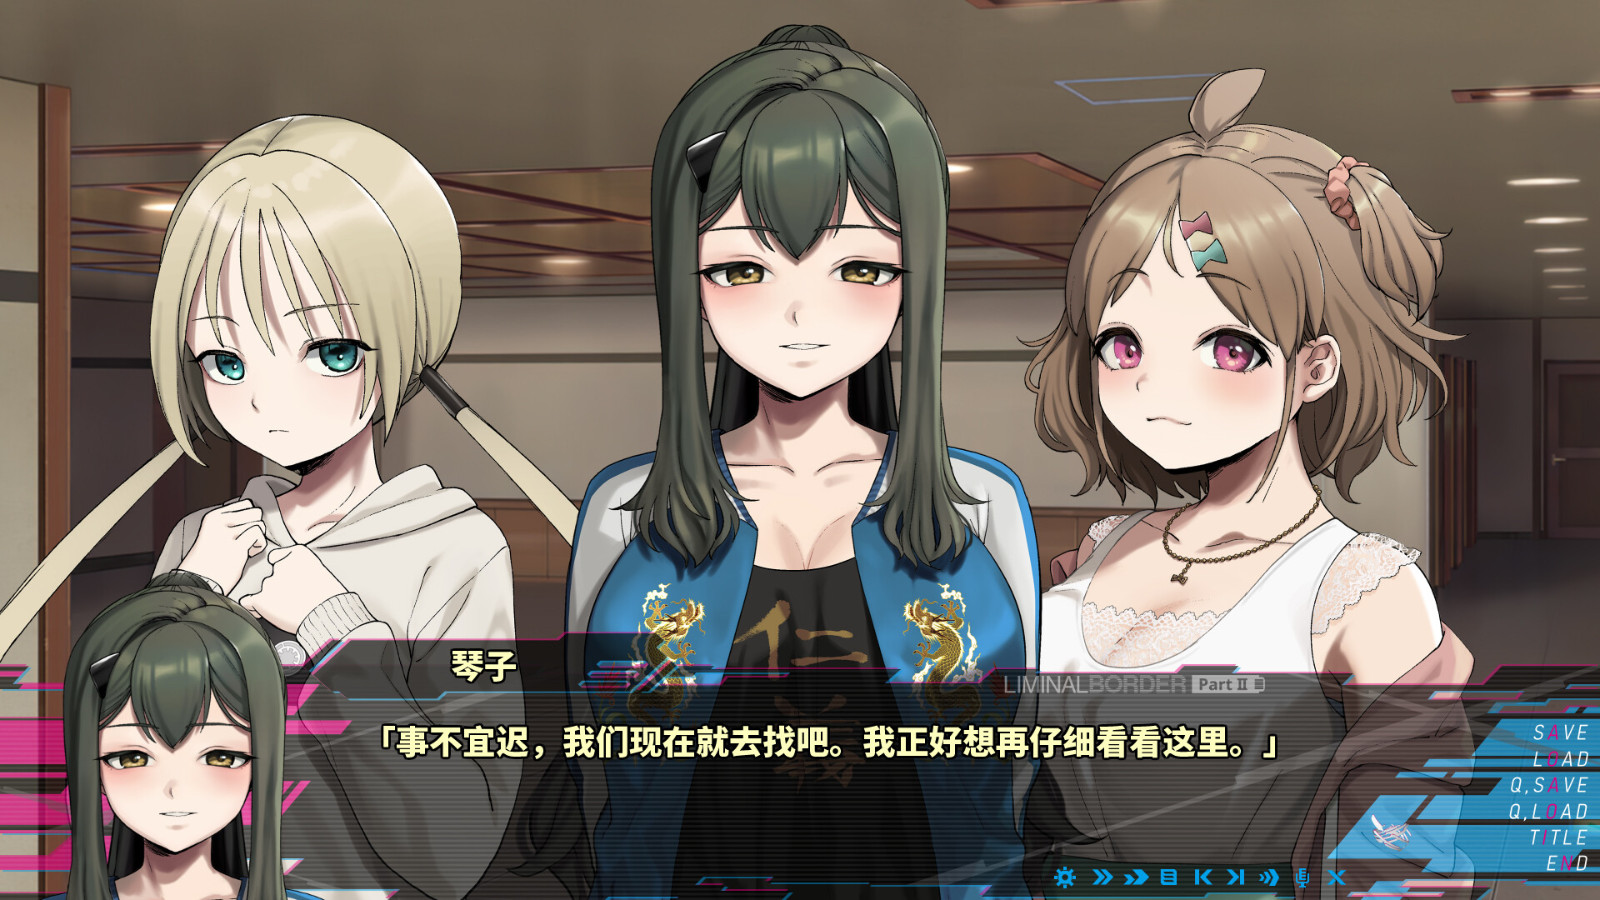 《Liminal Border Part II》Steam頁面上線 支持簡繁體中文